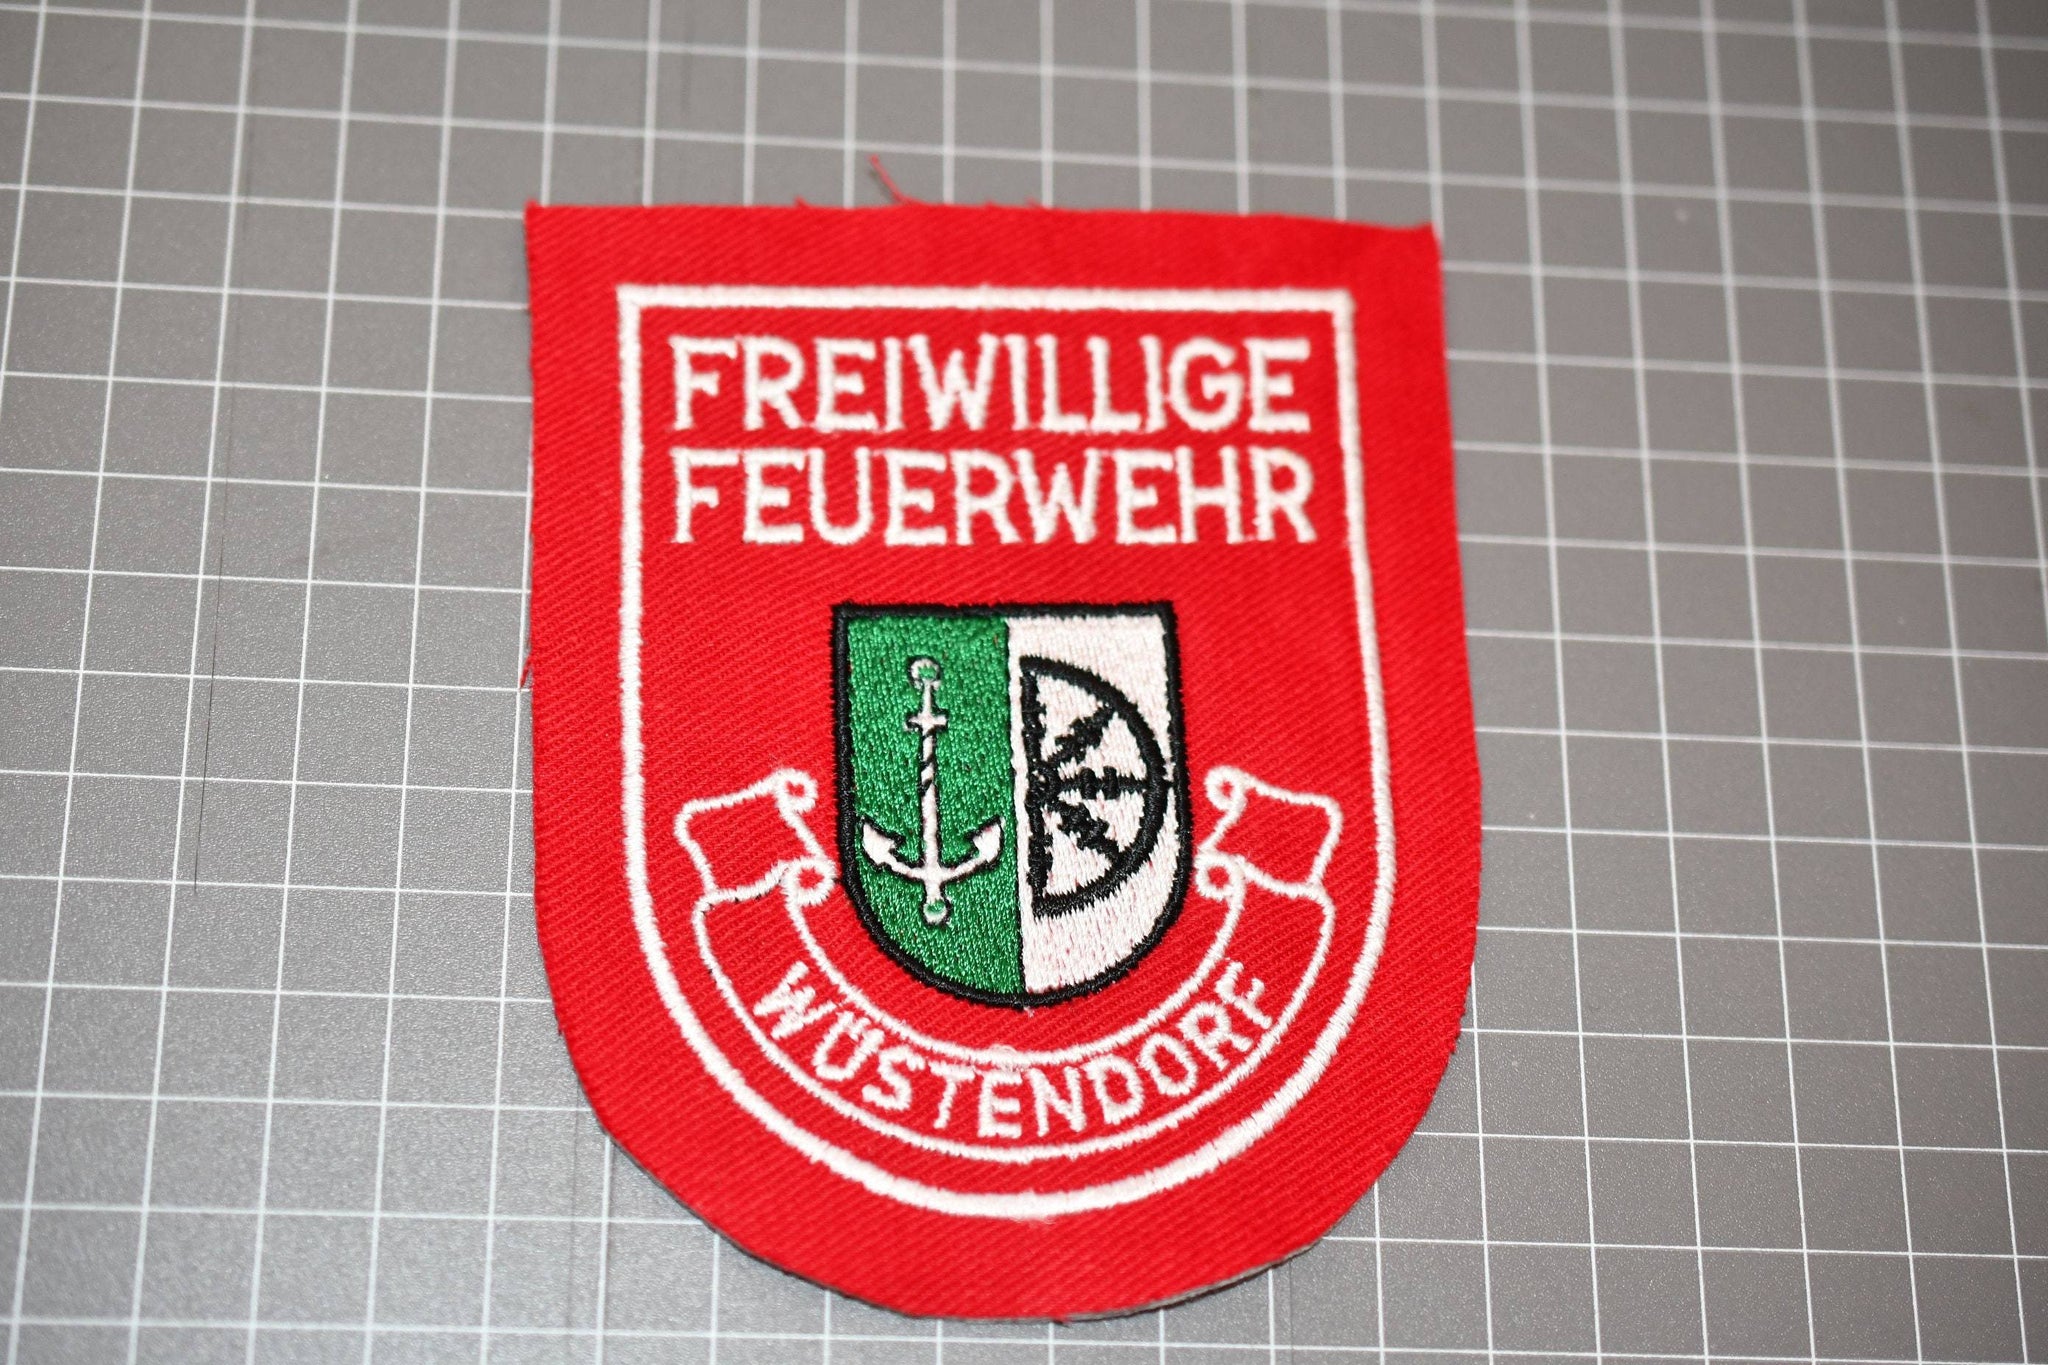 German Fire Service  Freiwillge Feurwehr Wustendorf Patch (B5)